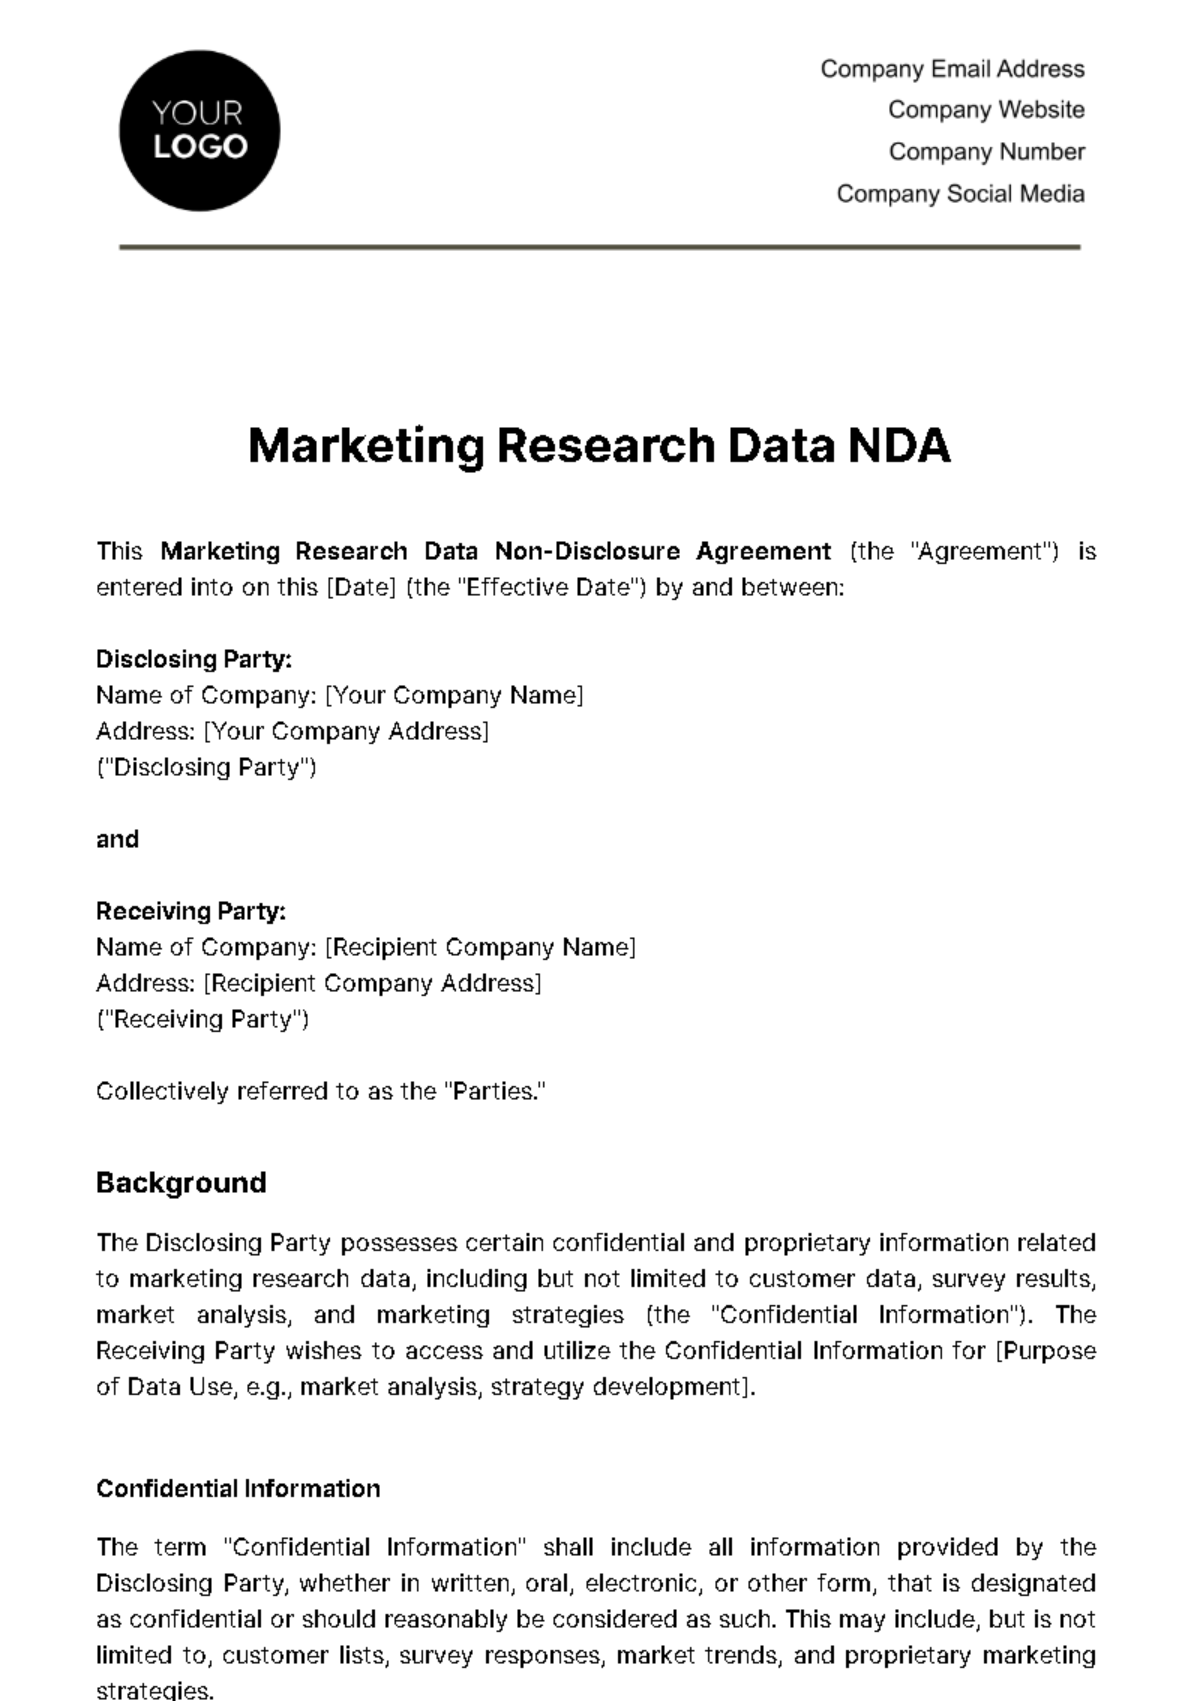 Free Marketing Research Data NDA Template